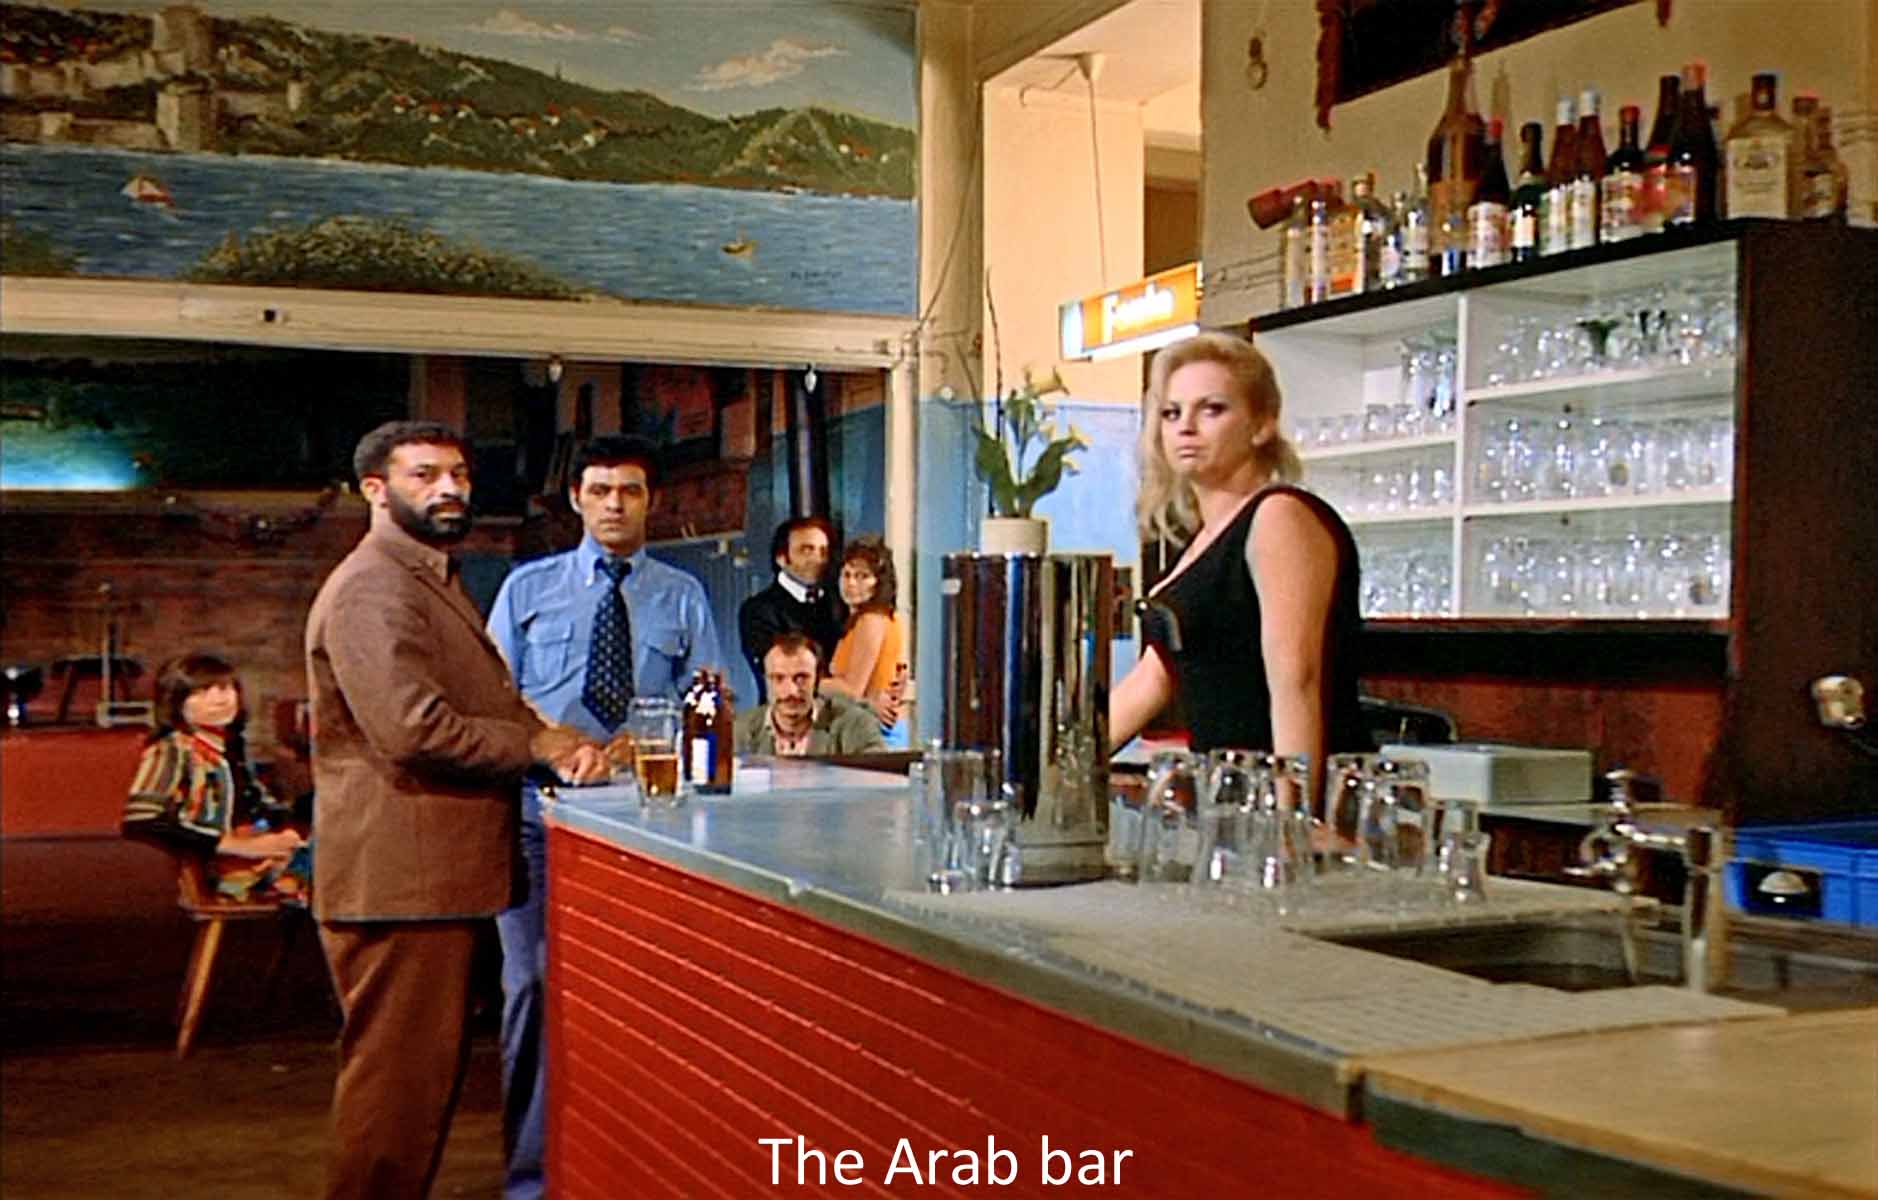 The Arab bar